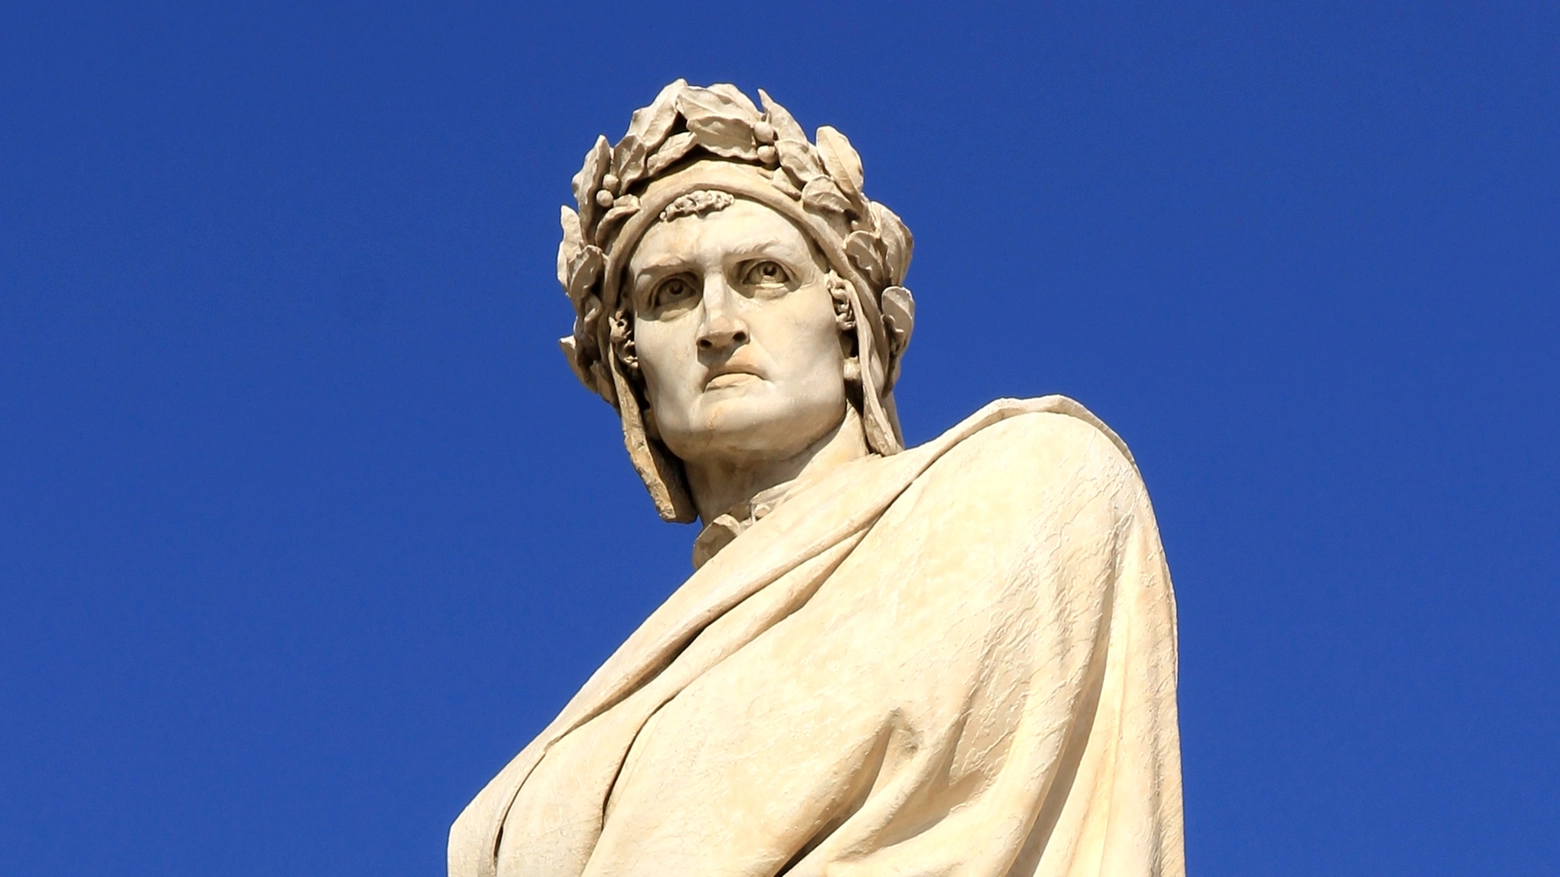 La statua di Dante Alighieri in piazza Santa Croce 